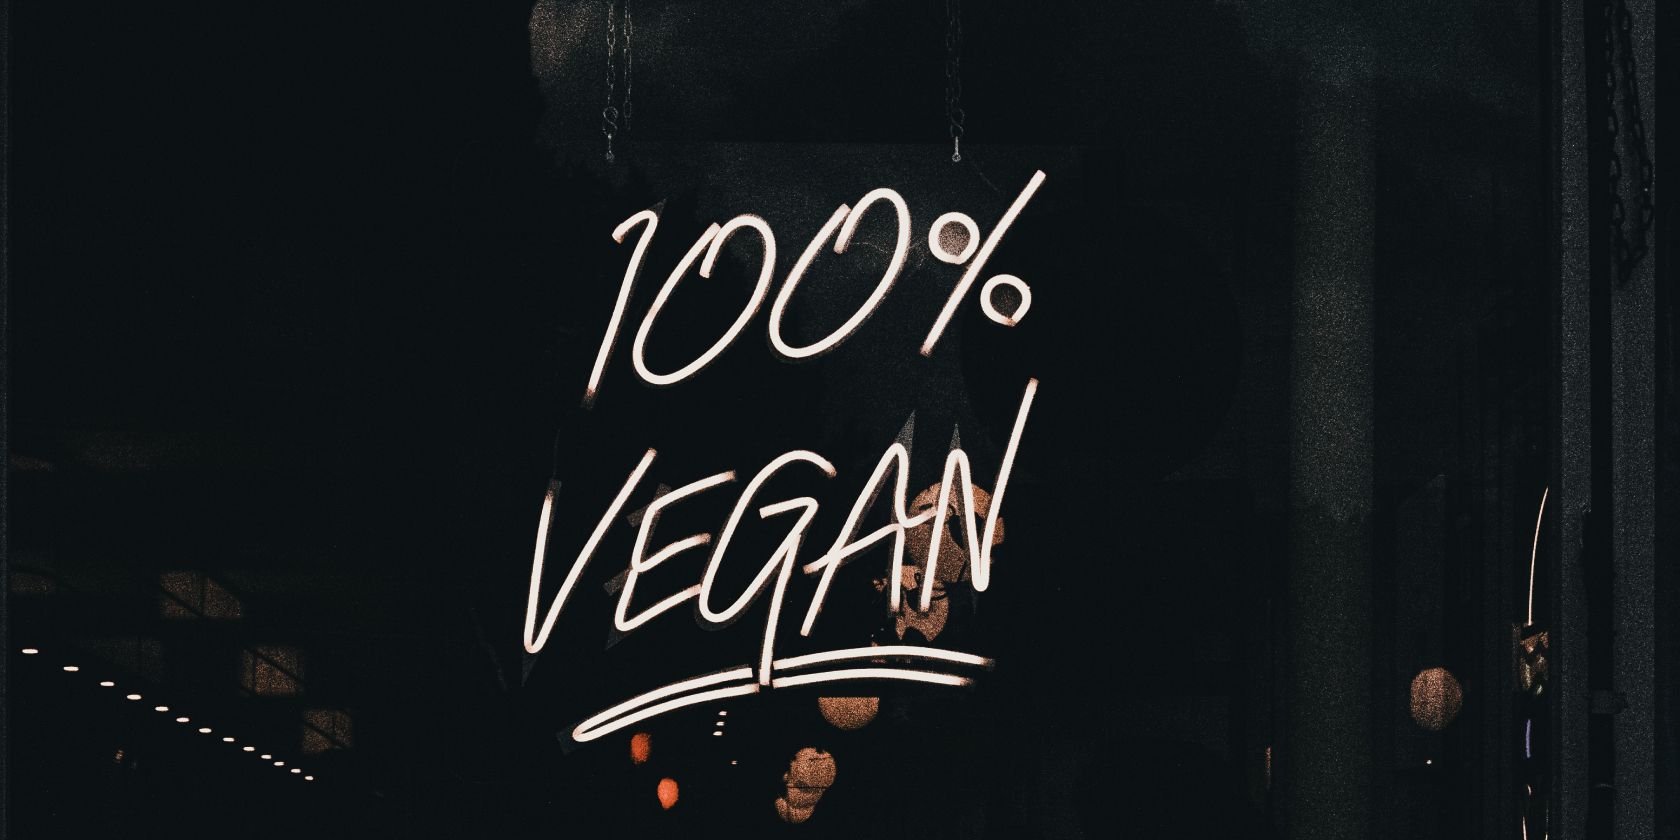 Neon that reads 100 percet vegan